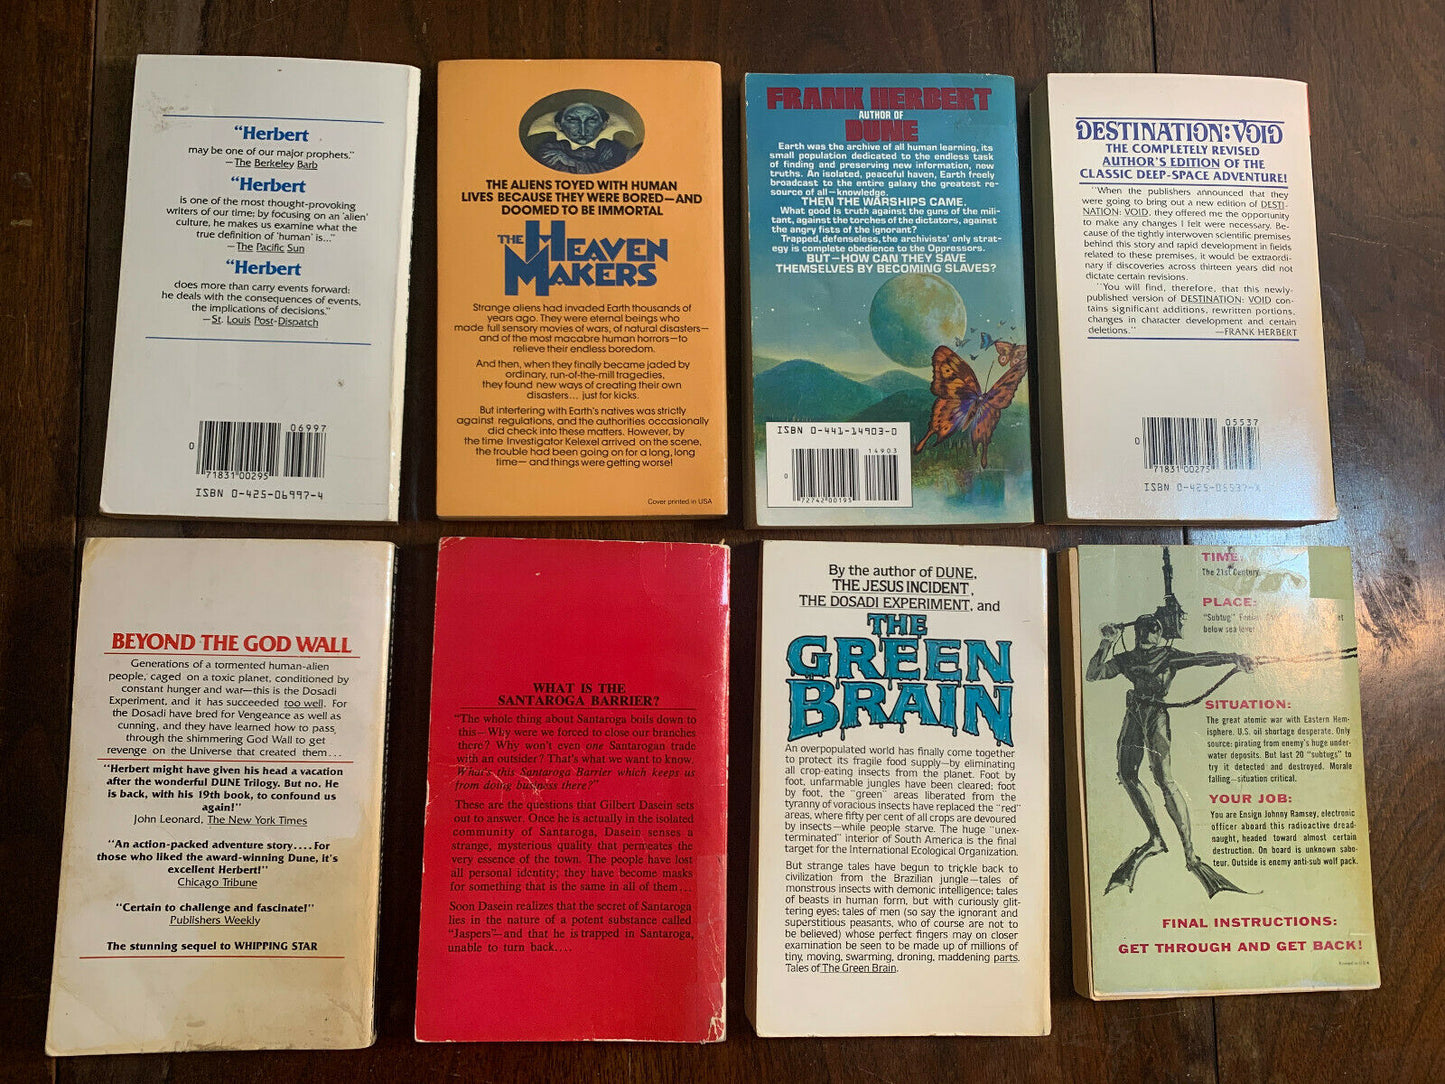 Frank Herbert lot of 8 books: Green Brain Santaroga Barrier Direct Descent Whipp